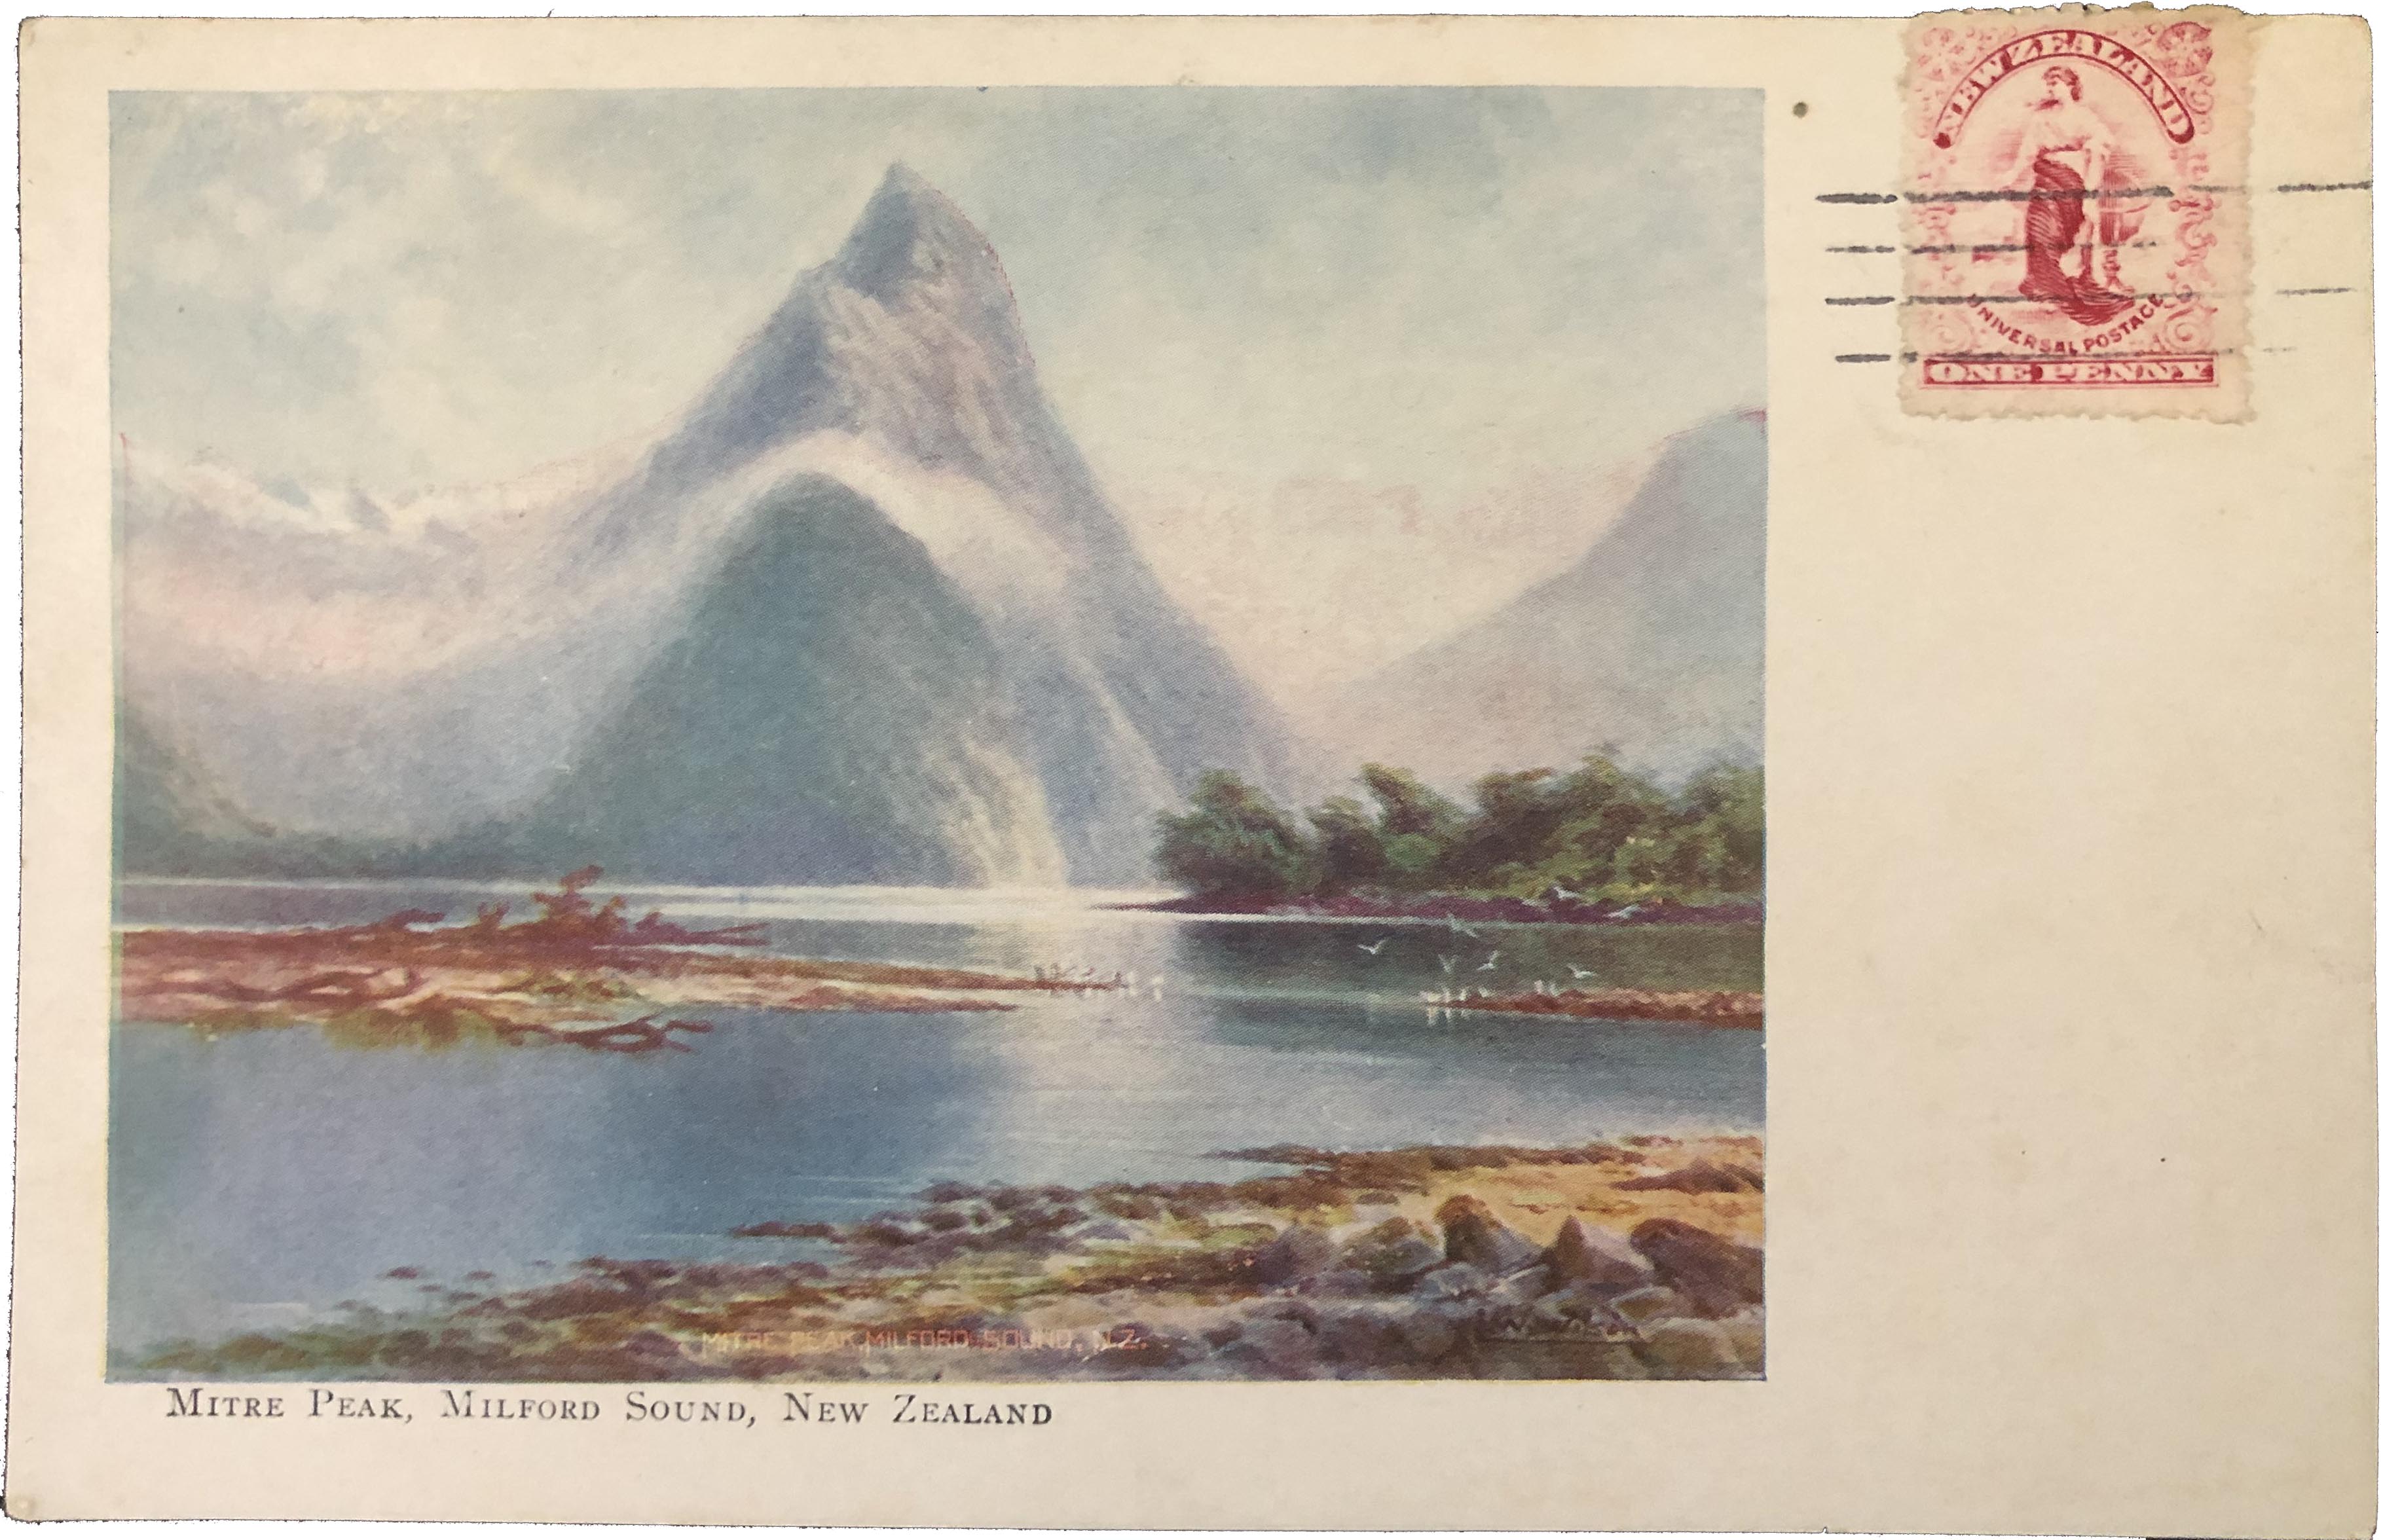 Wilson postcard, Mitre Peak, Milford Sound, New Zealand, -- LINK to larger image